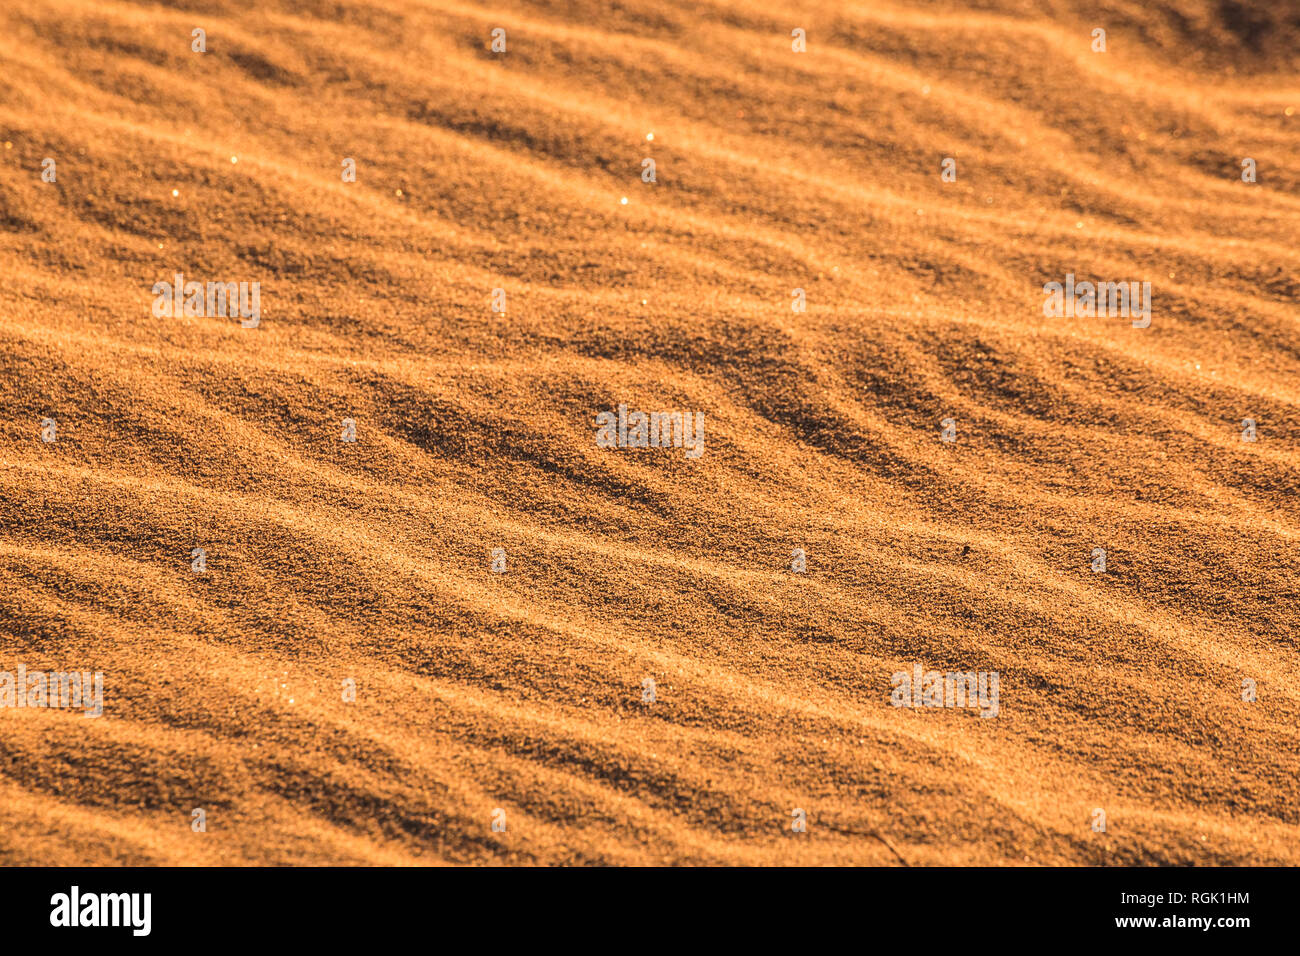 USA, californien, la vallée de la mort, Death Valley National Park, Mesquite Flat Sand Dunes, full frame Banque D'Images